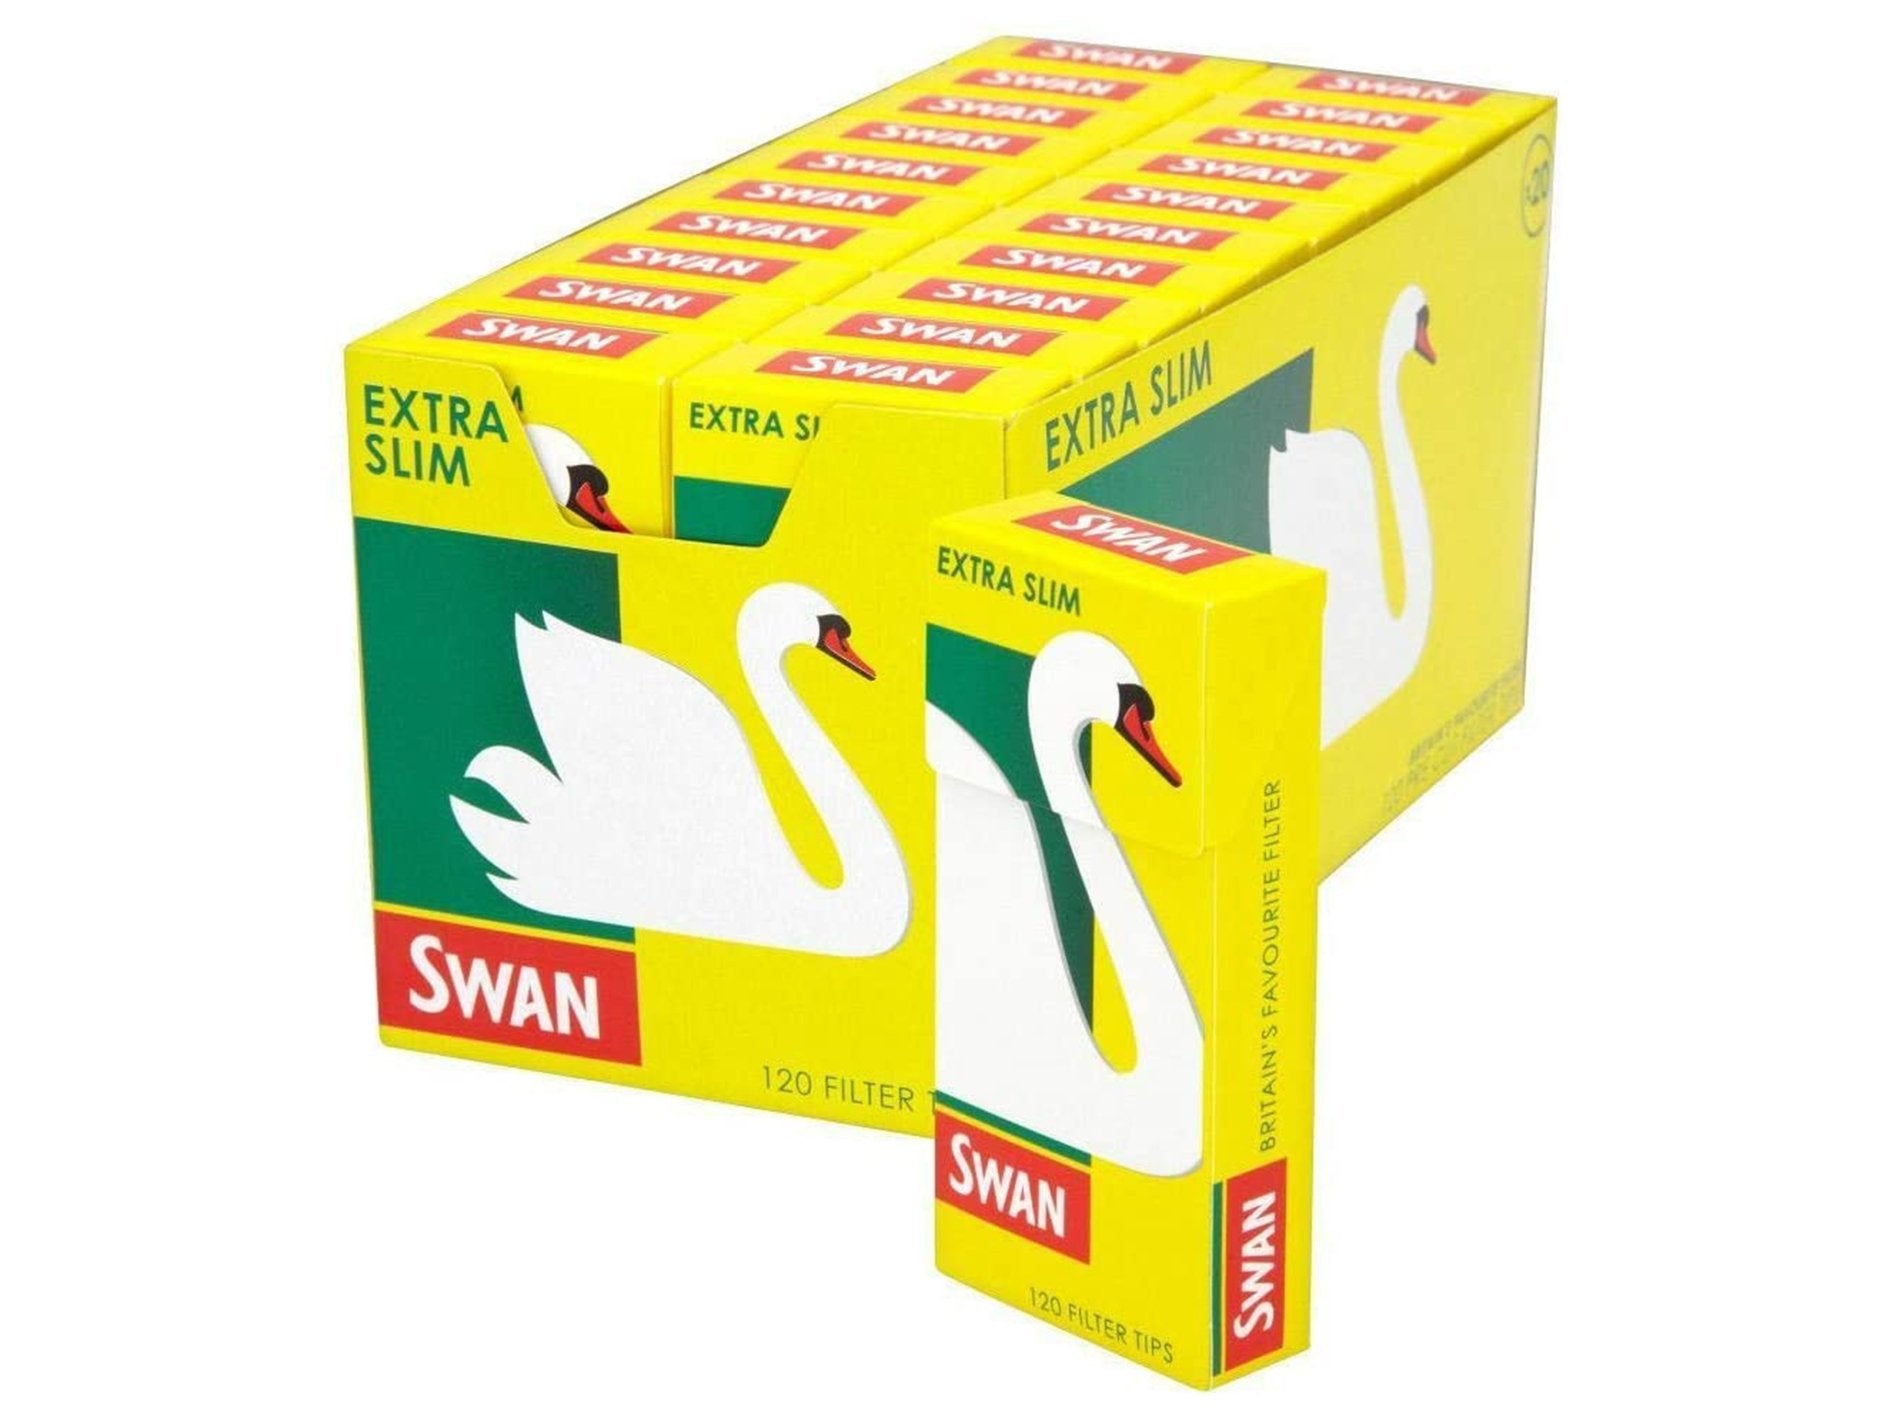 SWAN Extra Slim Filter Tips - 20 Per Box (Total 2400 Tips) - VIR Wholesale